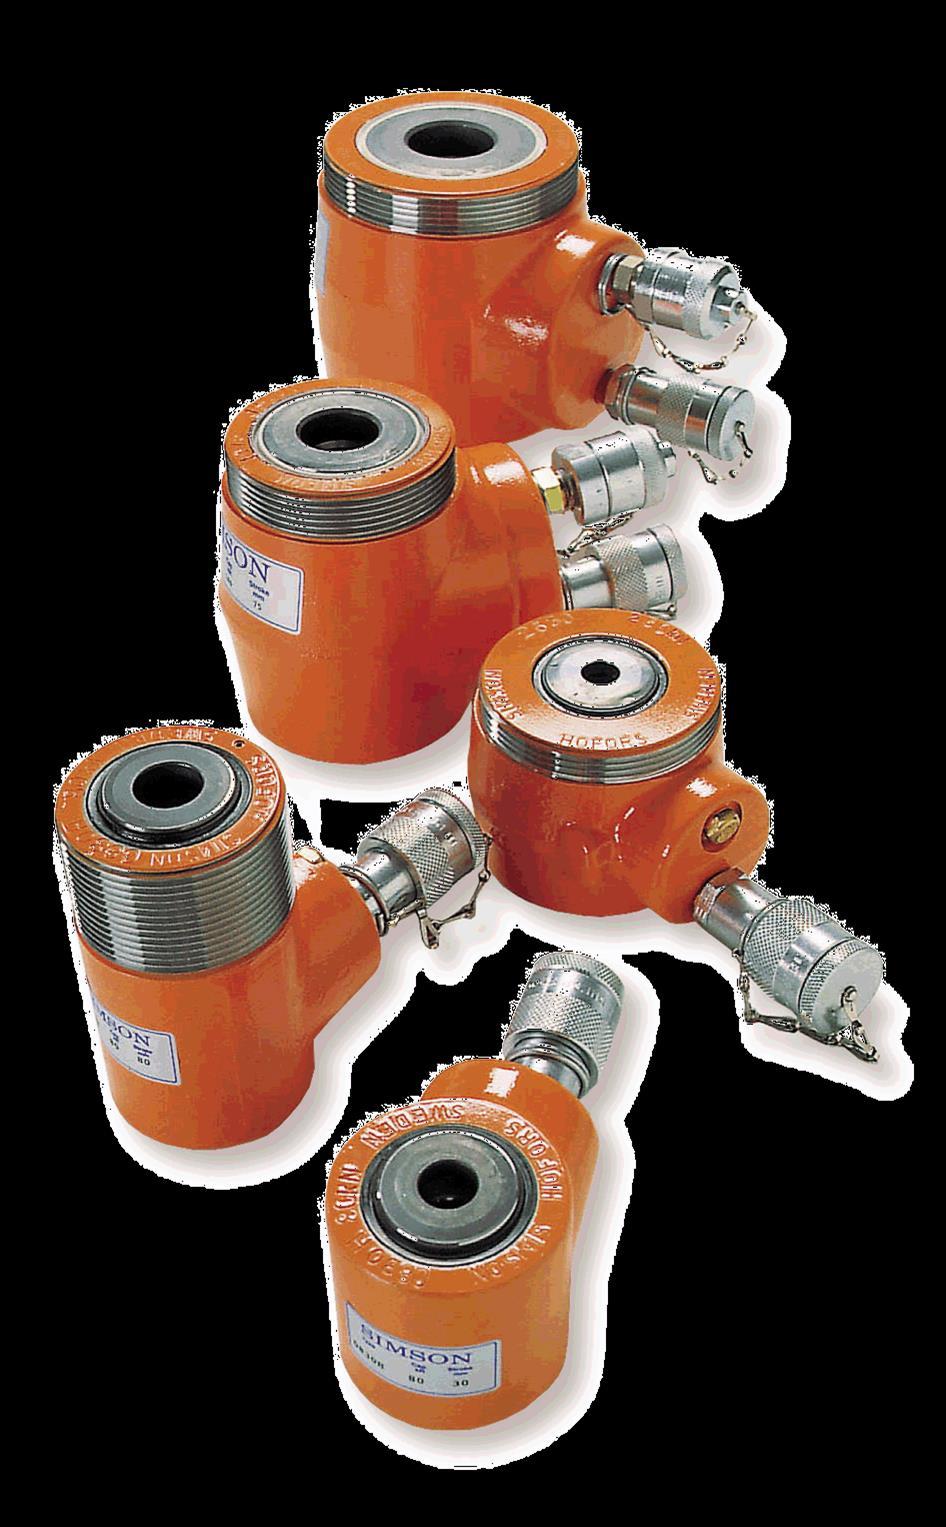 SIMSON KOMBI Simson Kombicylindrar är i grund en Simson Kompaktcylinder utan handpump.